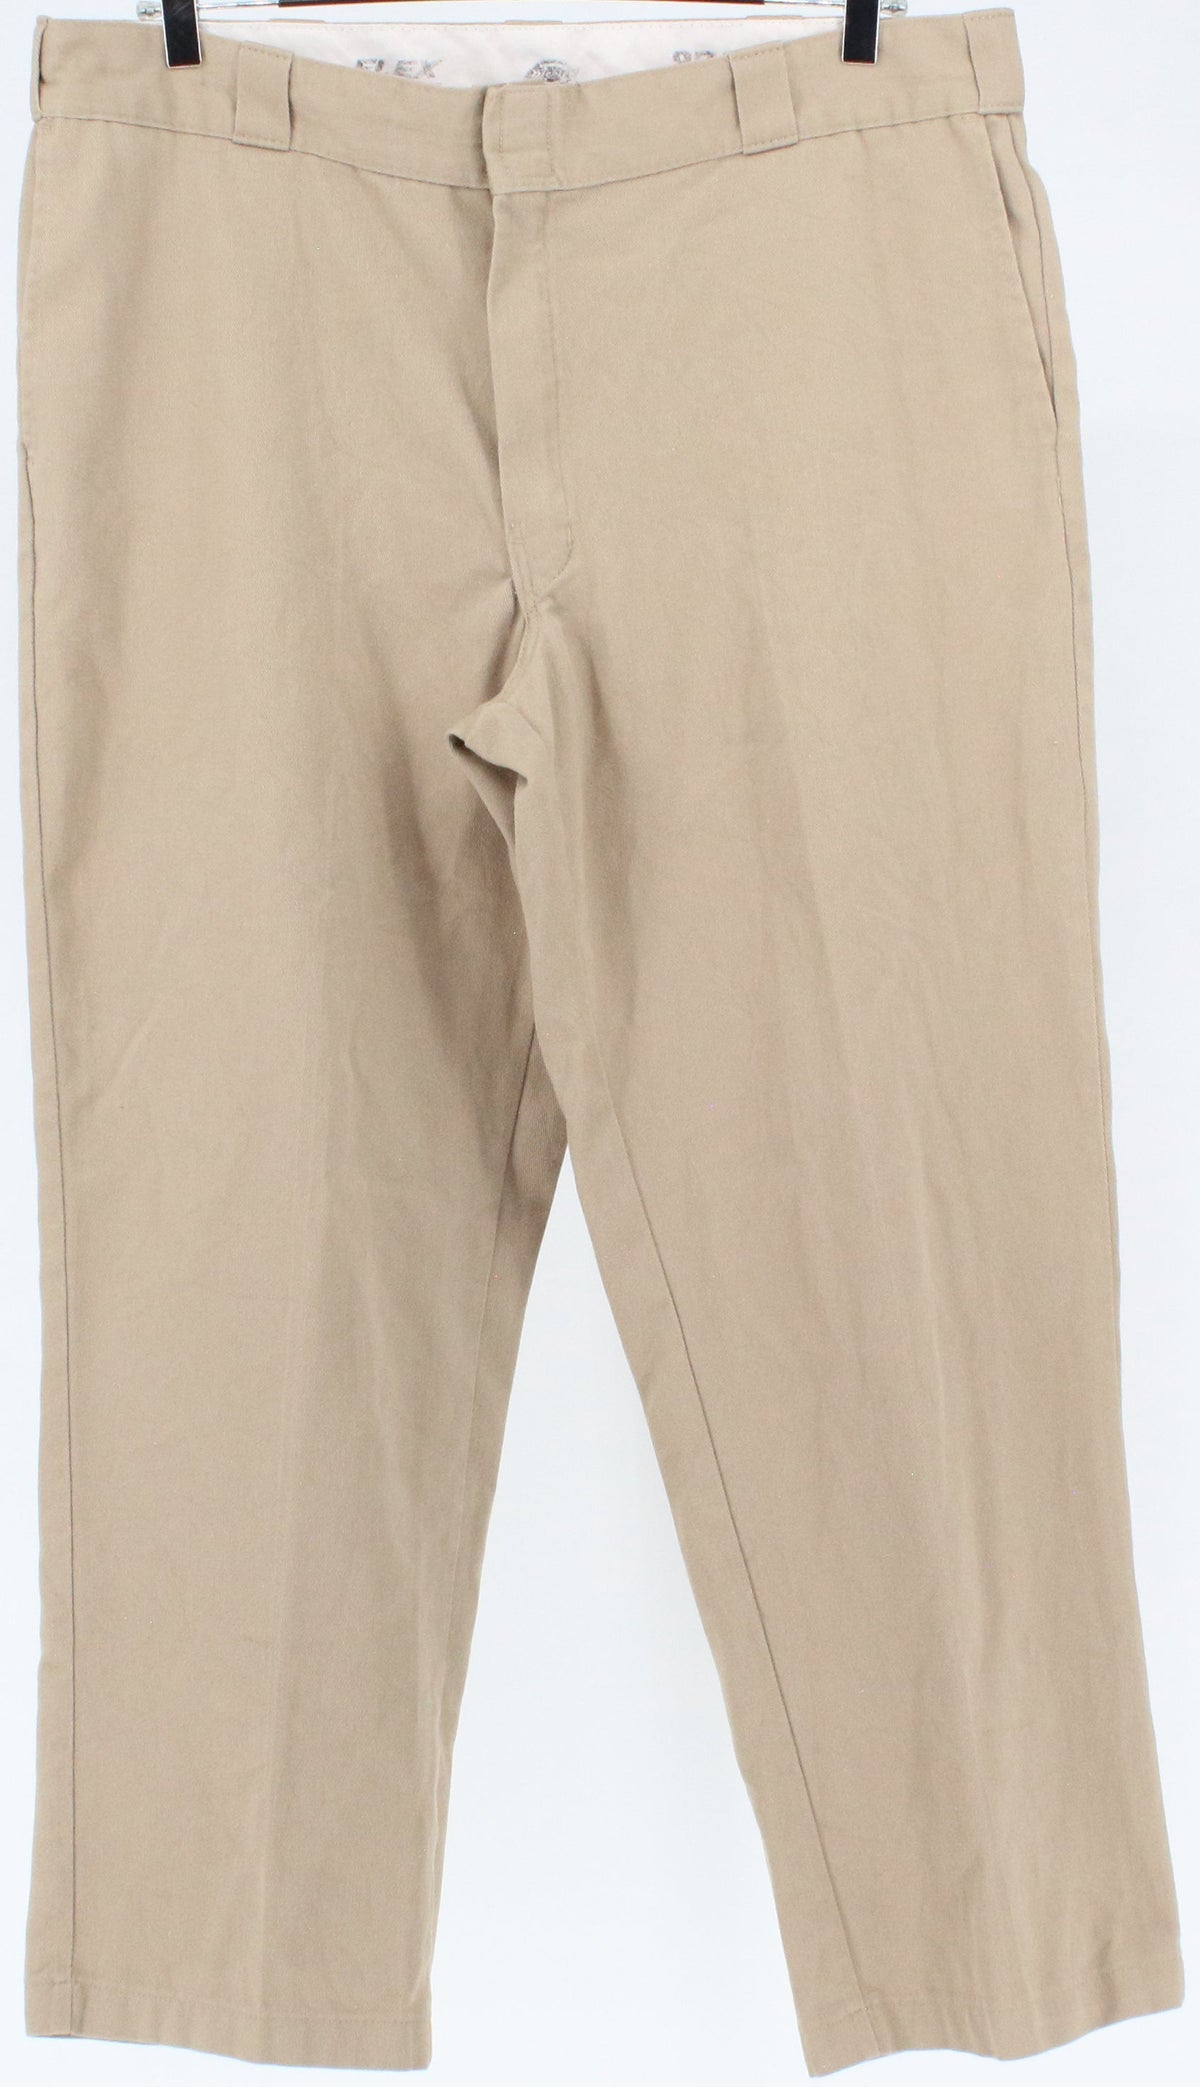 Dickies Flex 874 Original Fit Beige Men's Pants